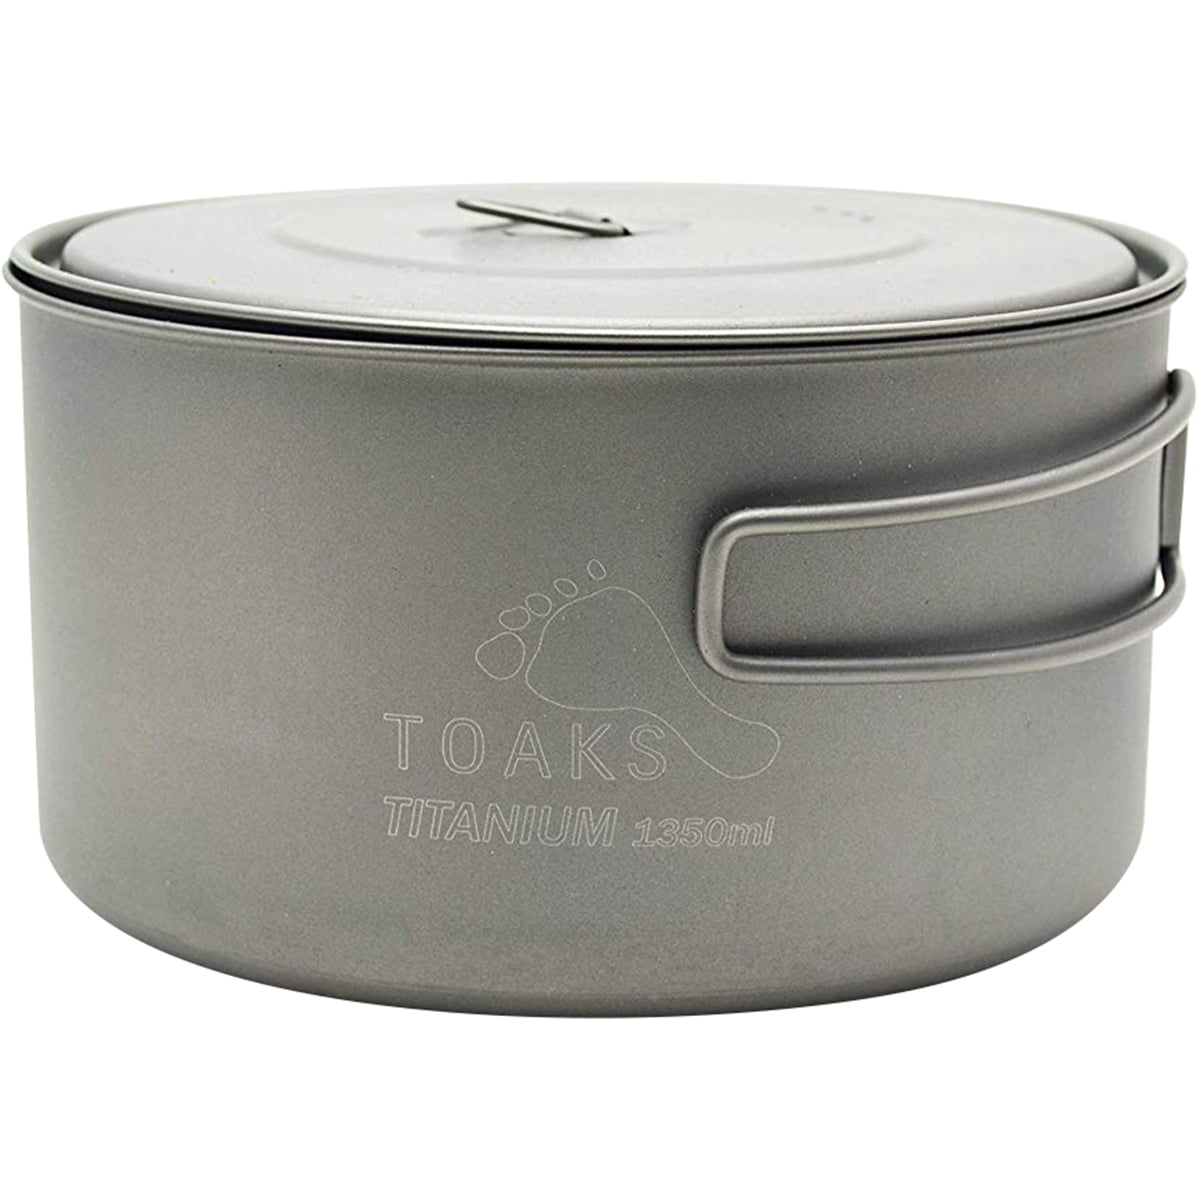 TOAKS Titanium Outdoor Camping Cook Pot with Pan and Foldable Handles 